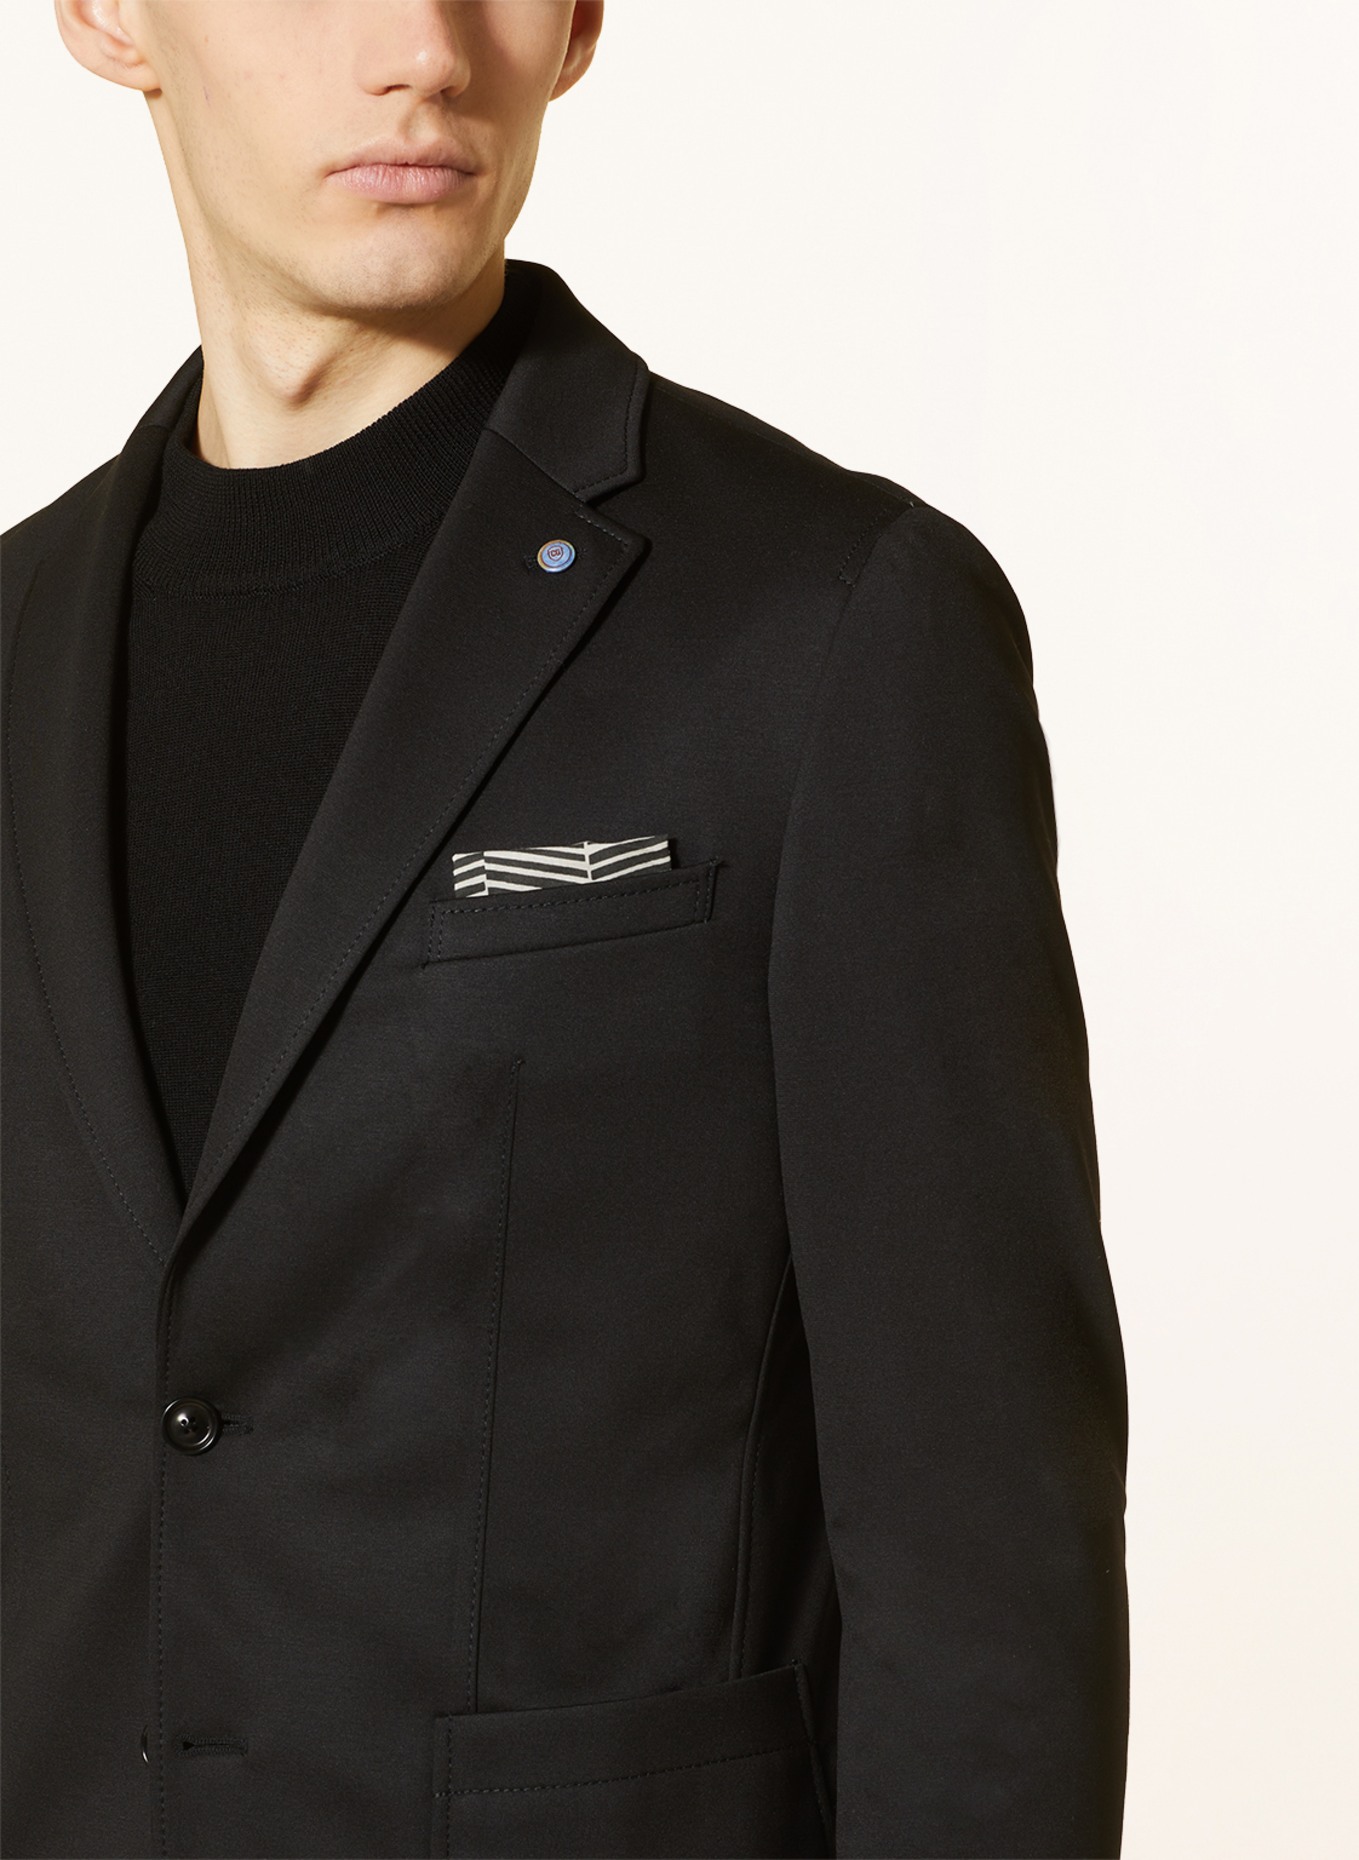 CG - CLUB of GENTS Suit jacket slim fit in jersey, Color: 90 SCHWARZ (Image 5)